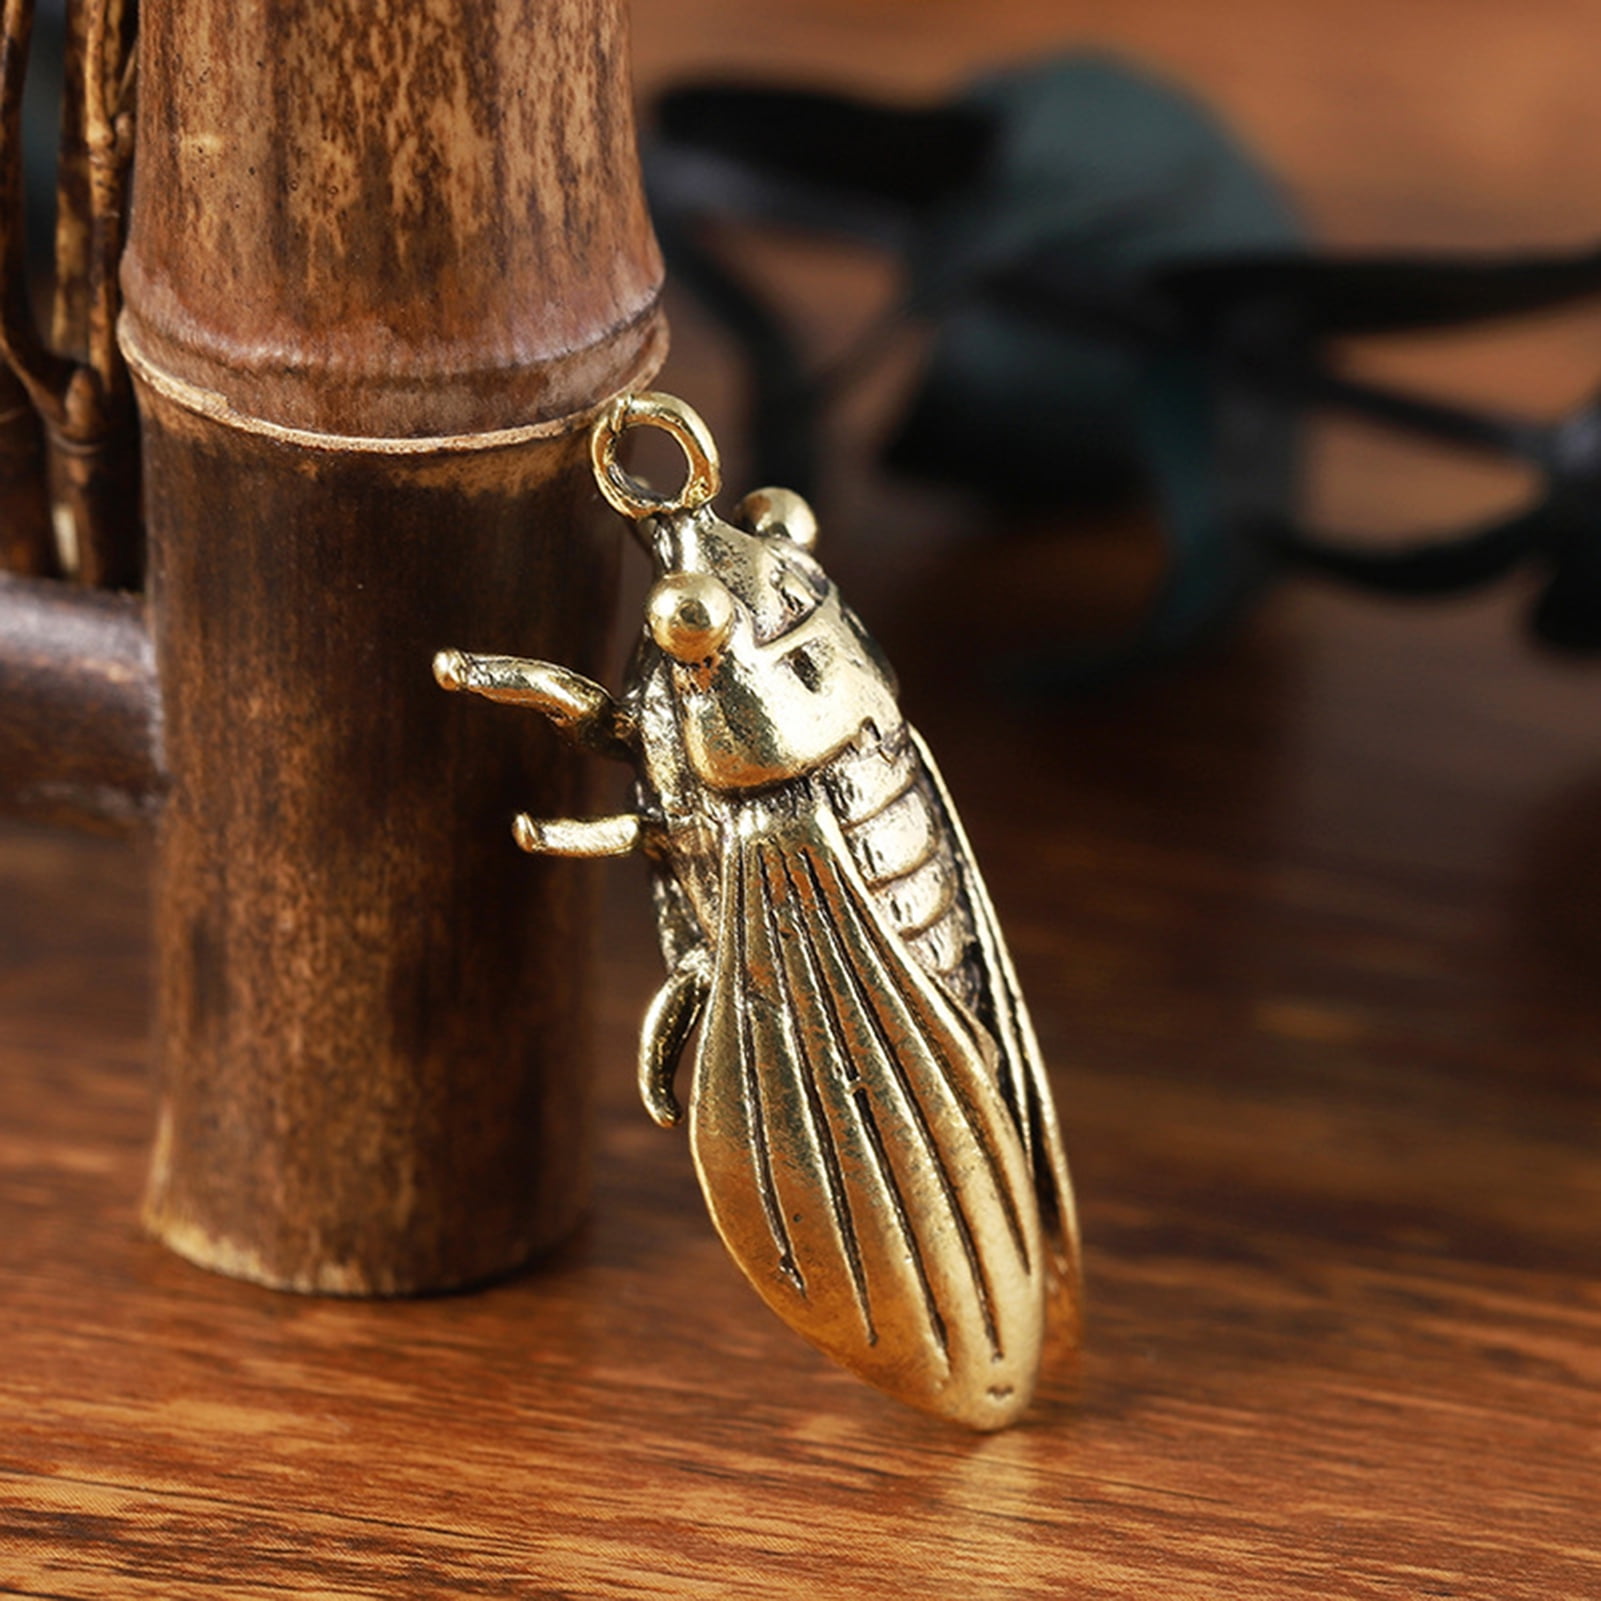 Details about   Antique Handmade Figurine Brass Cicada Ornaments Mini Desk Vintage Statue Crafts 